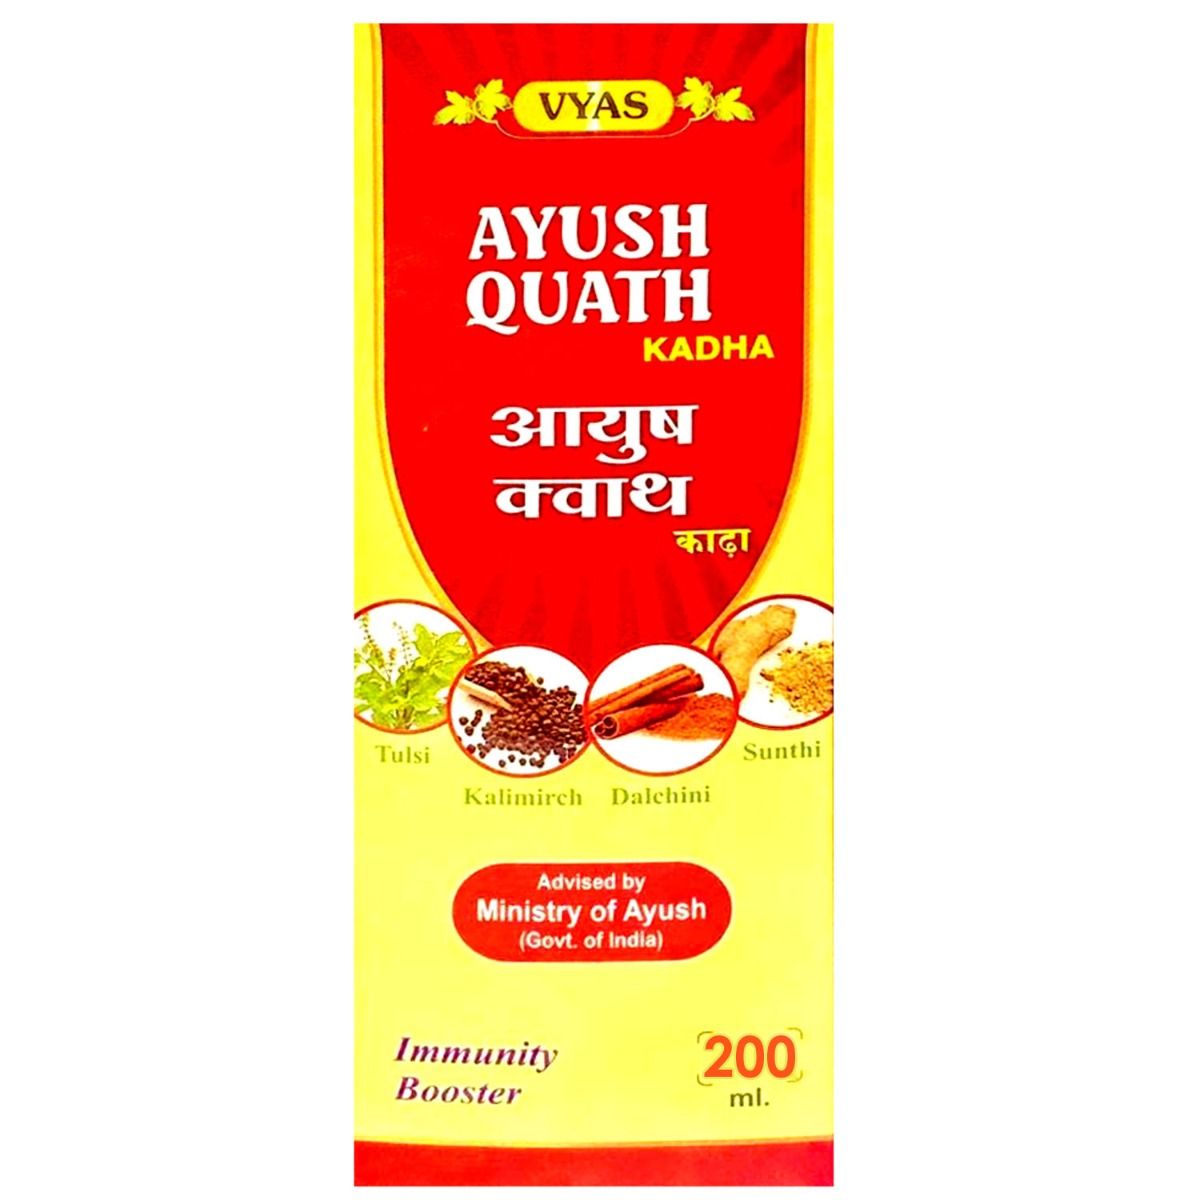 Vyas Ayush Quath Kadha, 200 ml, Pack of 1 